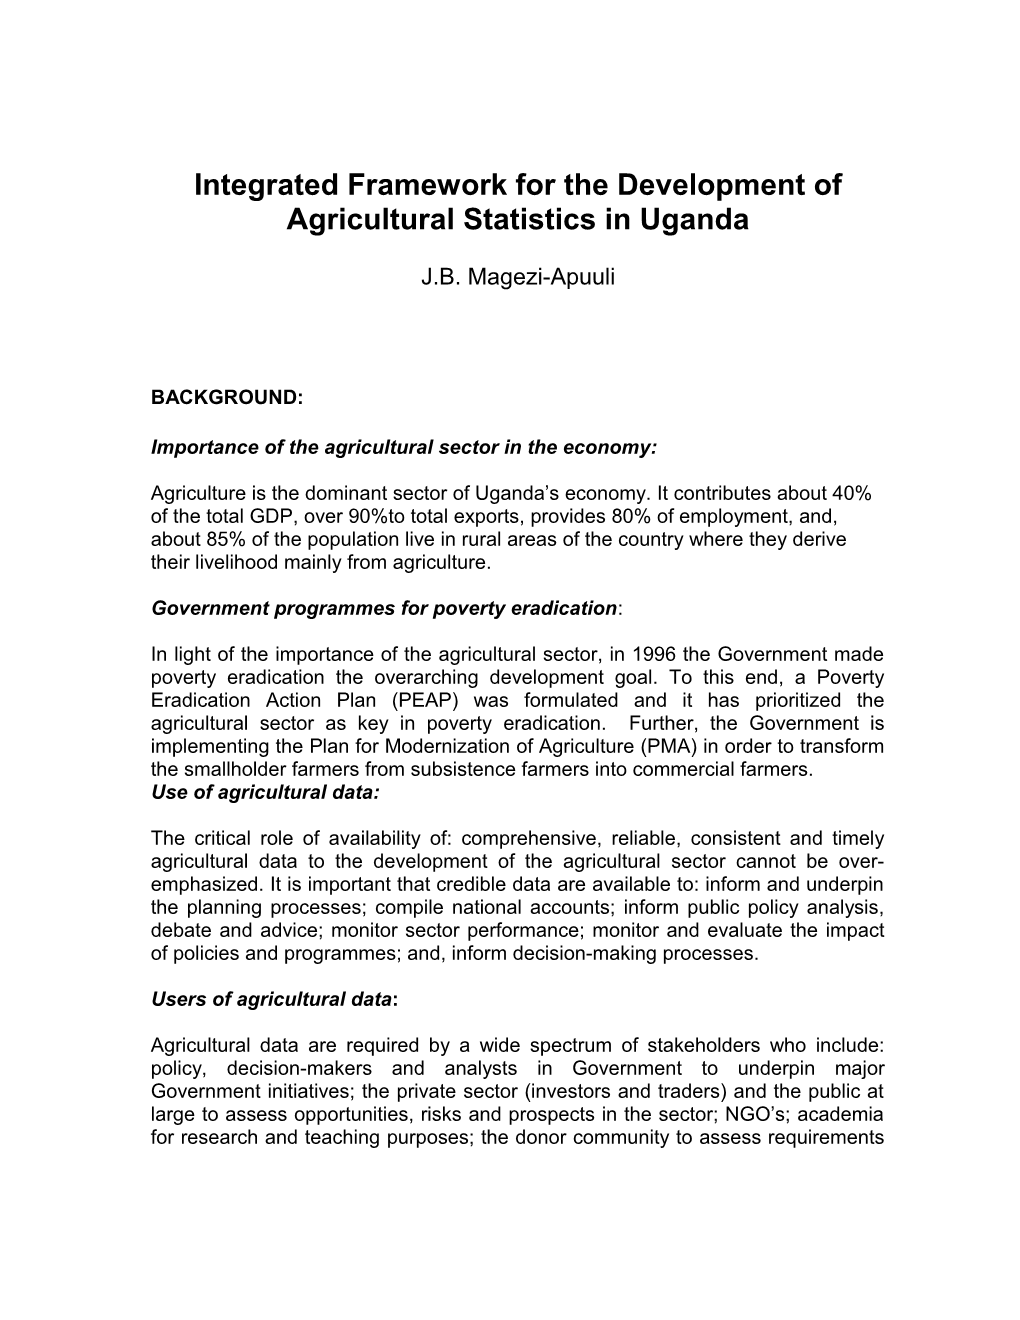 Integrated Framework for the Development of Agricultural Statistics in Uganda